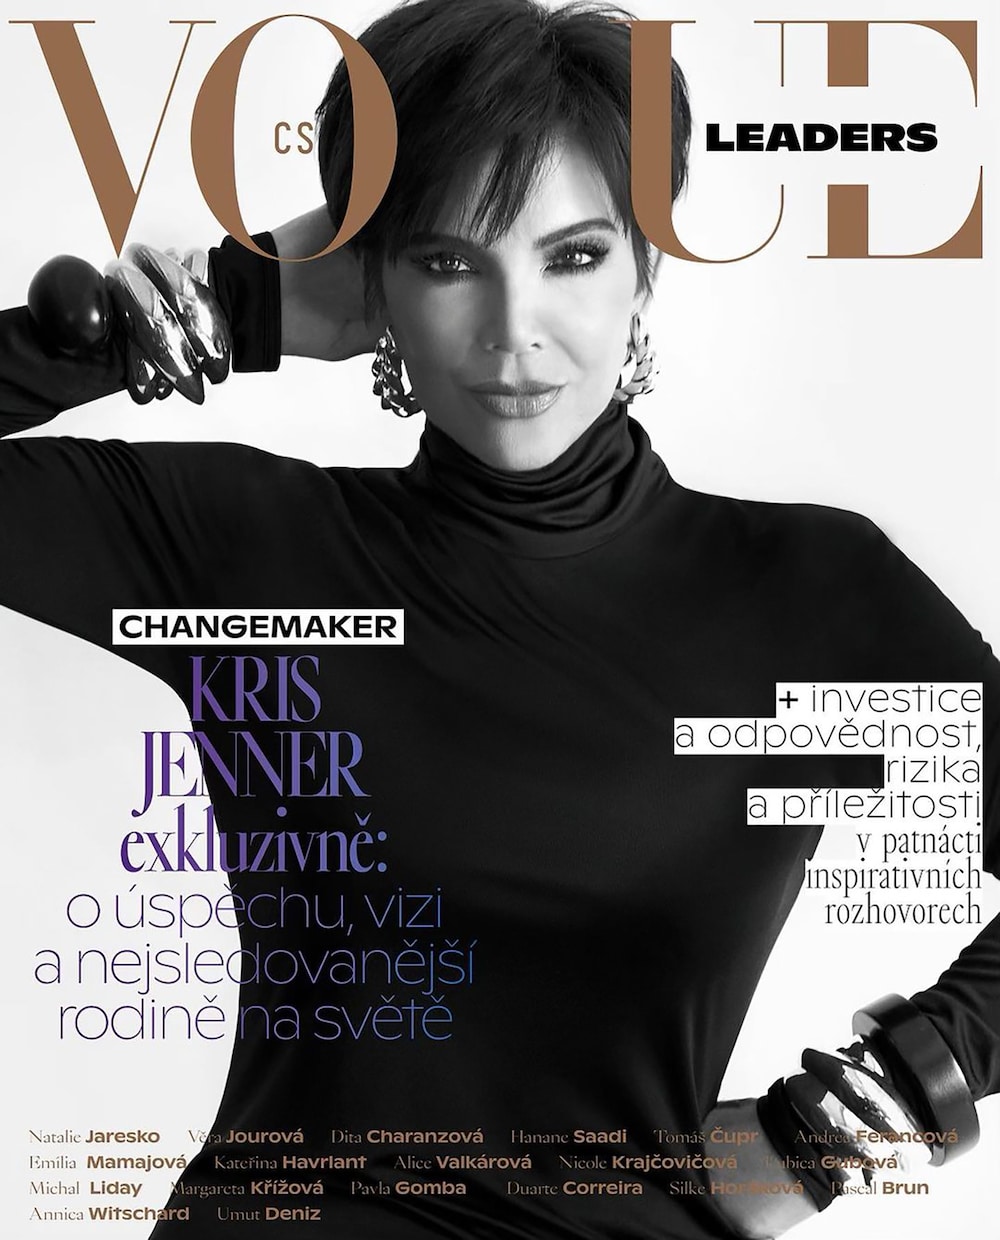 Kris Jenner lander sitt første Vogue-cover